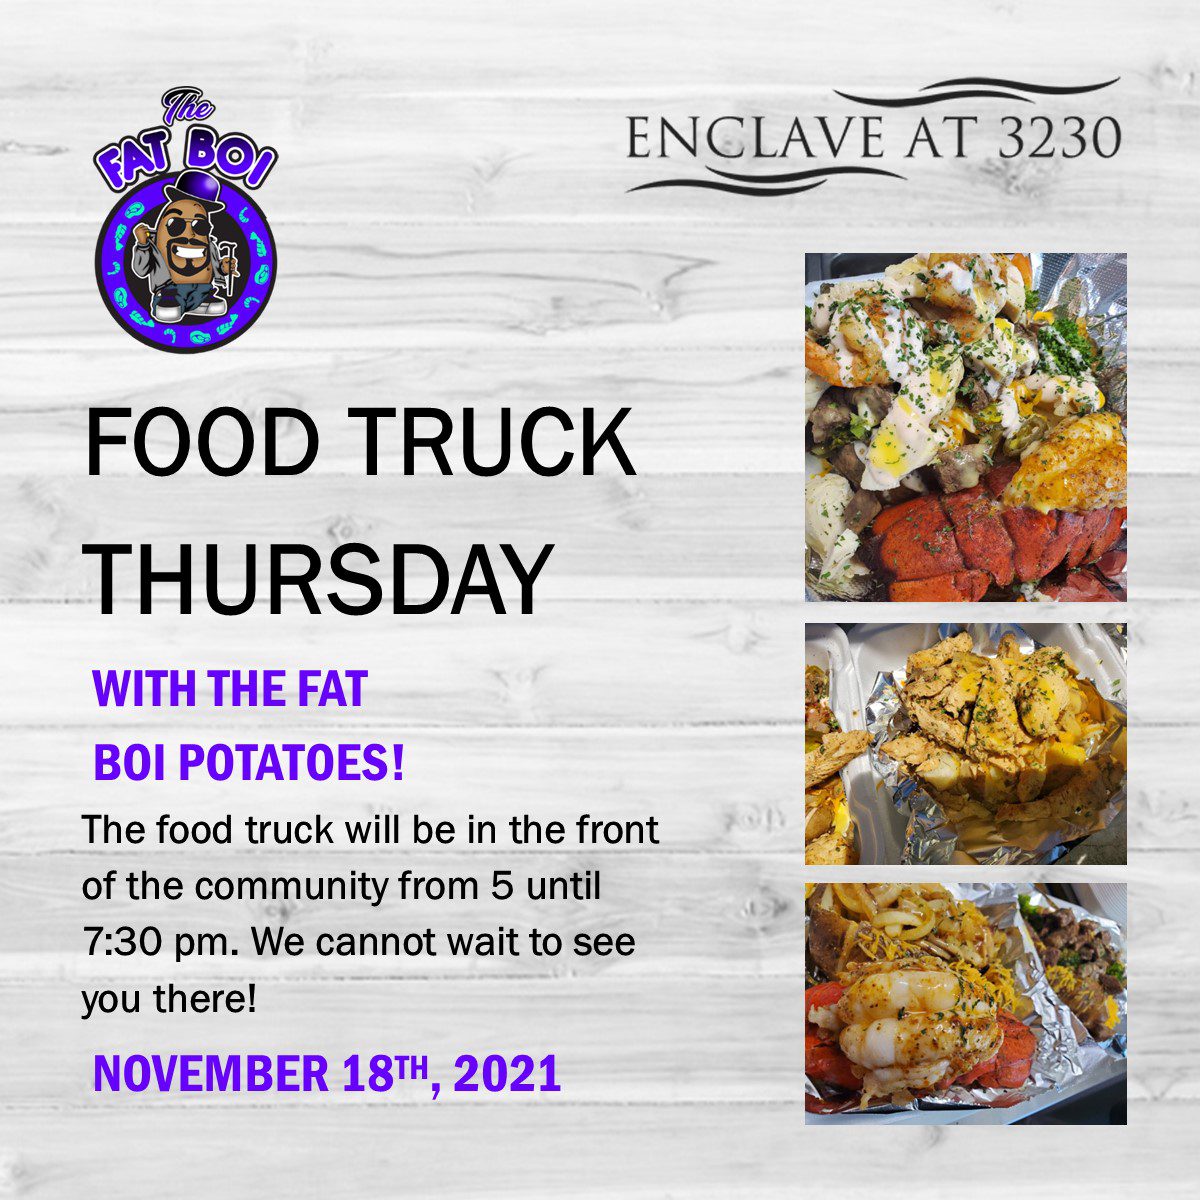 The Fat Boi Potatoes at Enclave at 3230